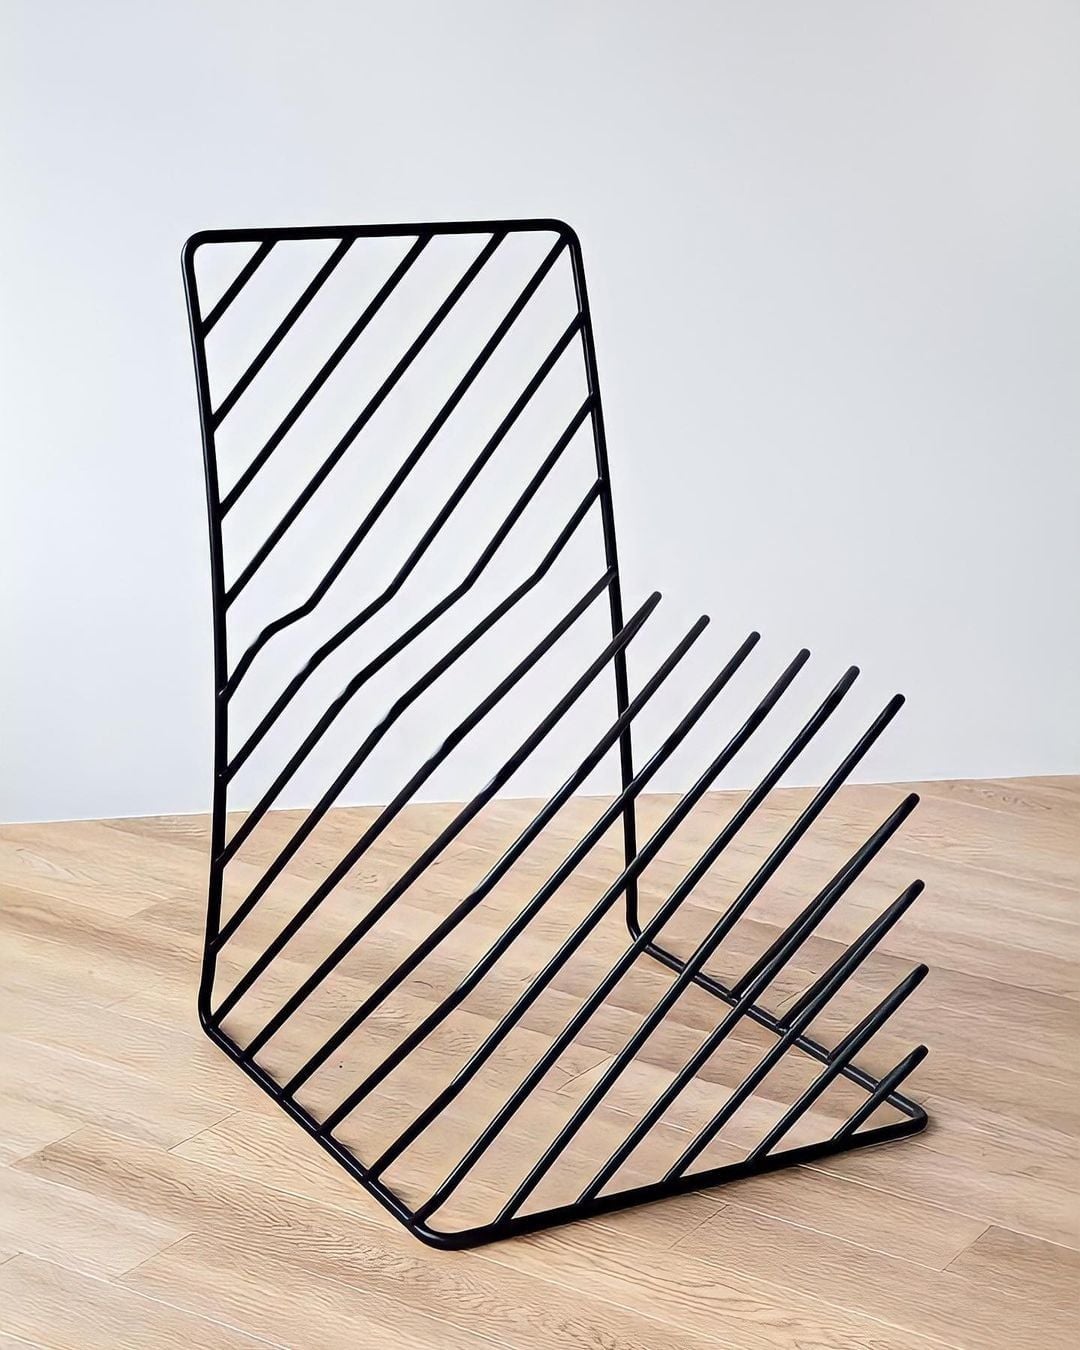 Minimalist Chair By Nendo Studio (1)